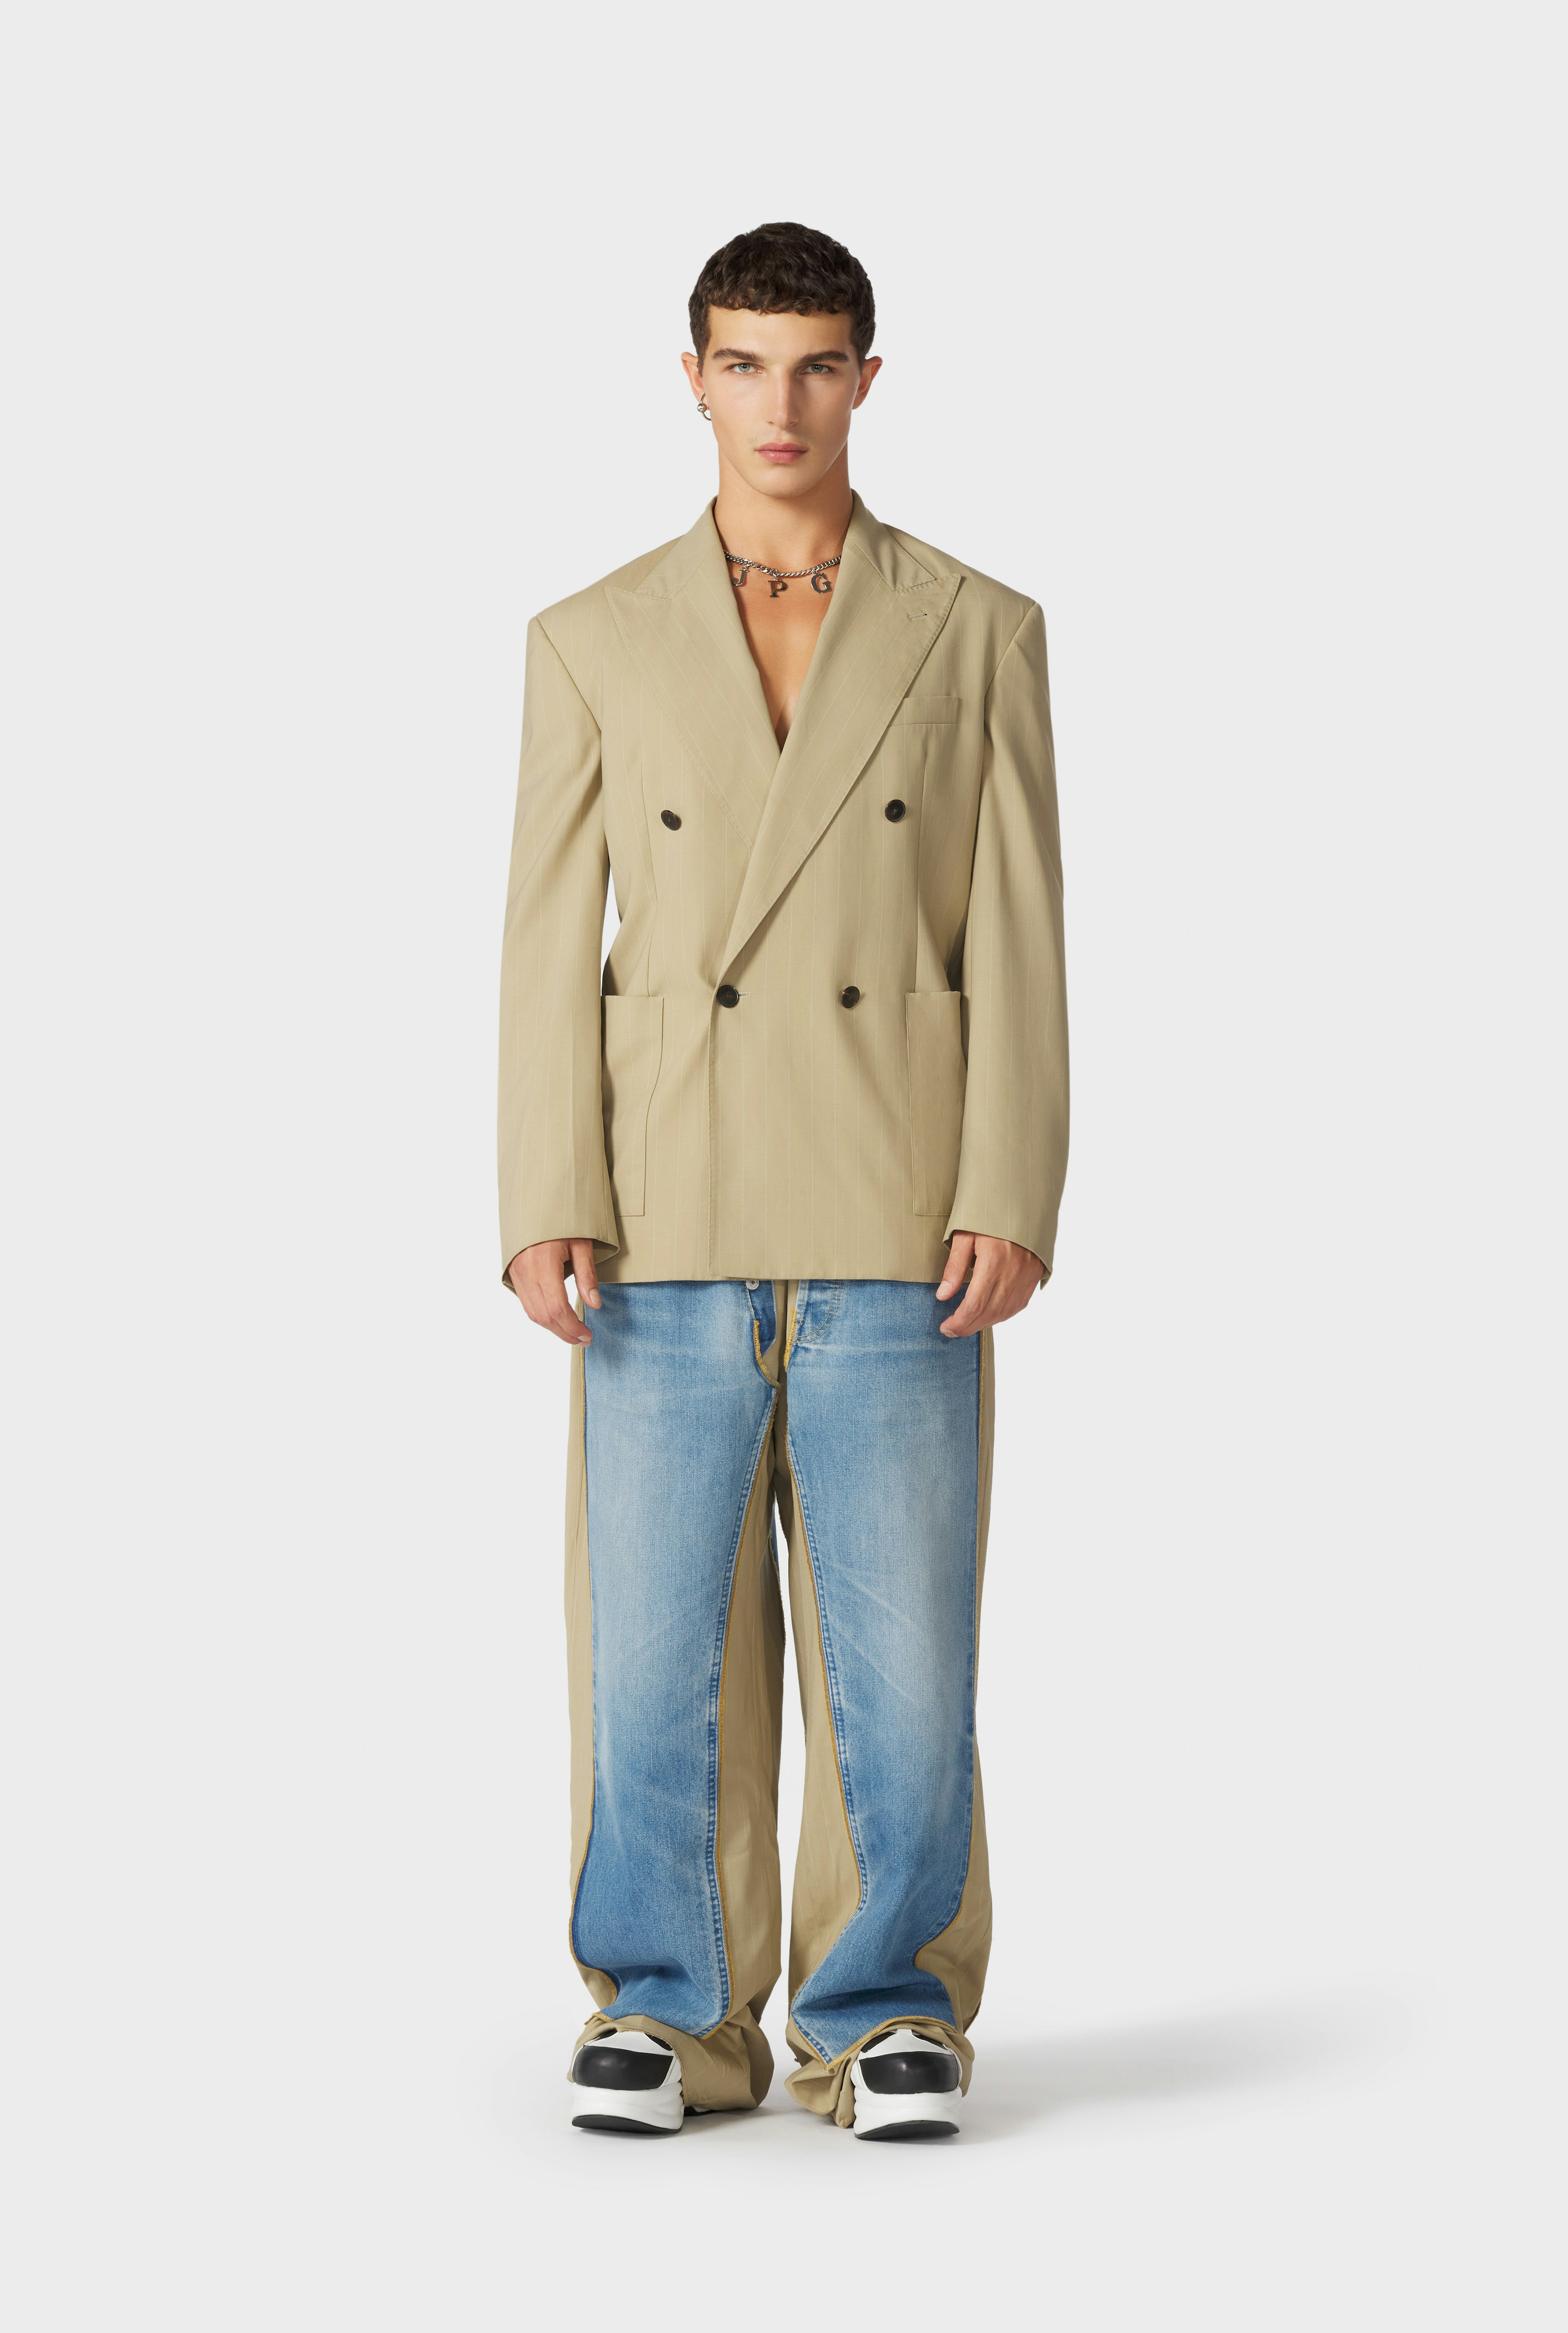 The Suit jacket Jean Paul Gaultier